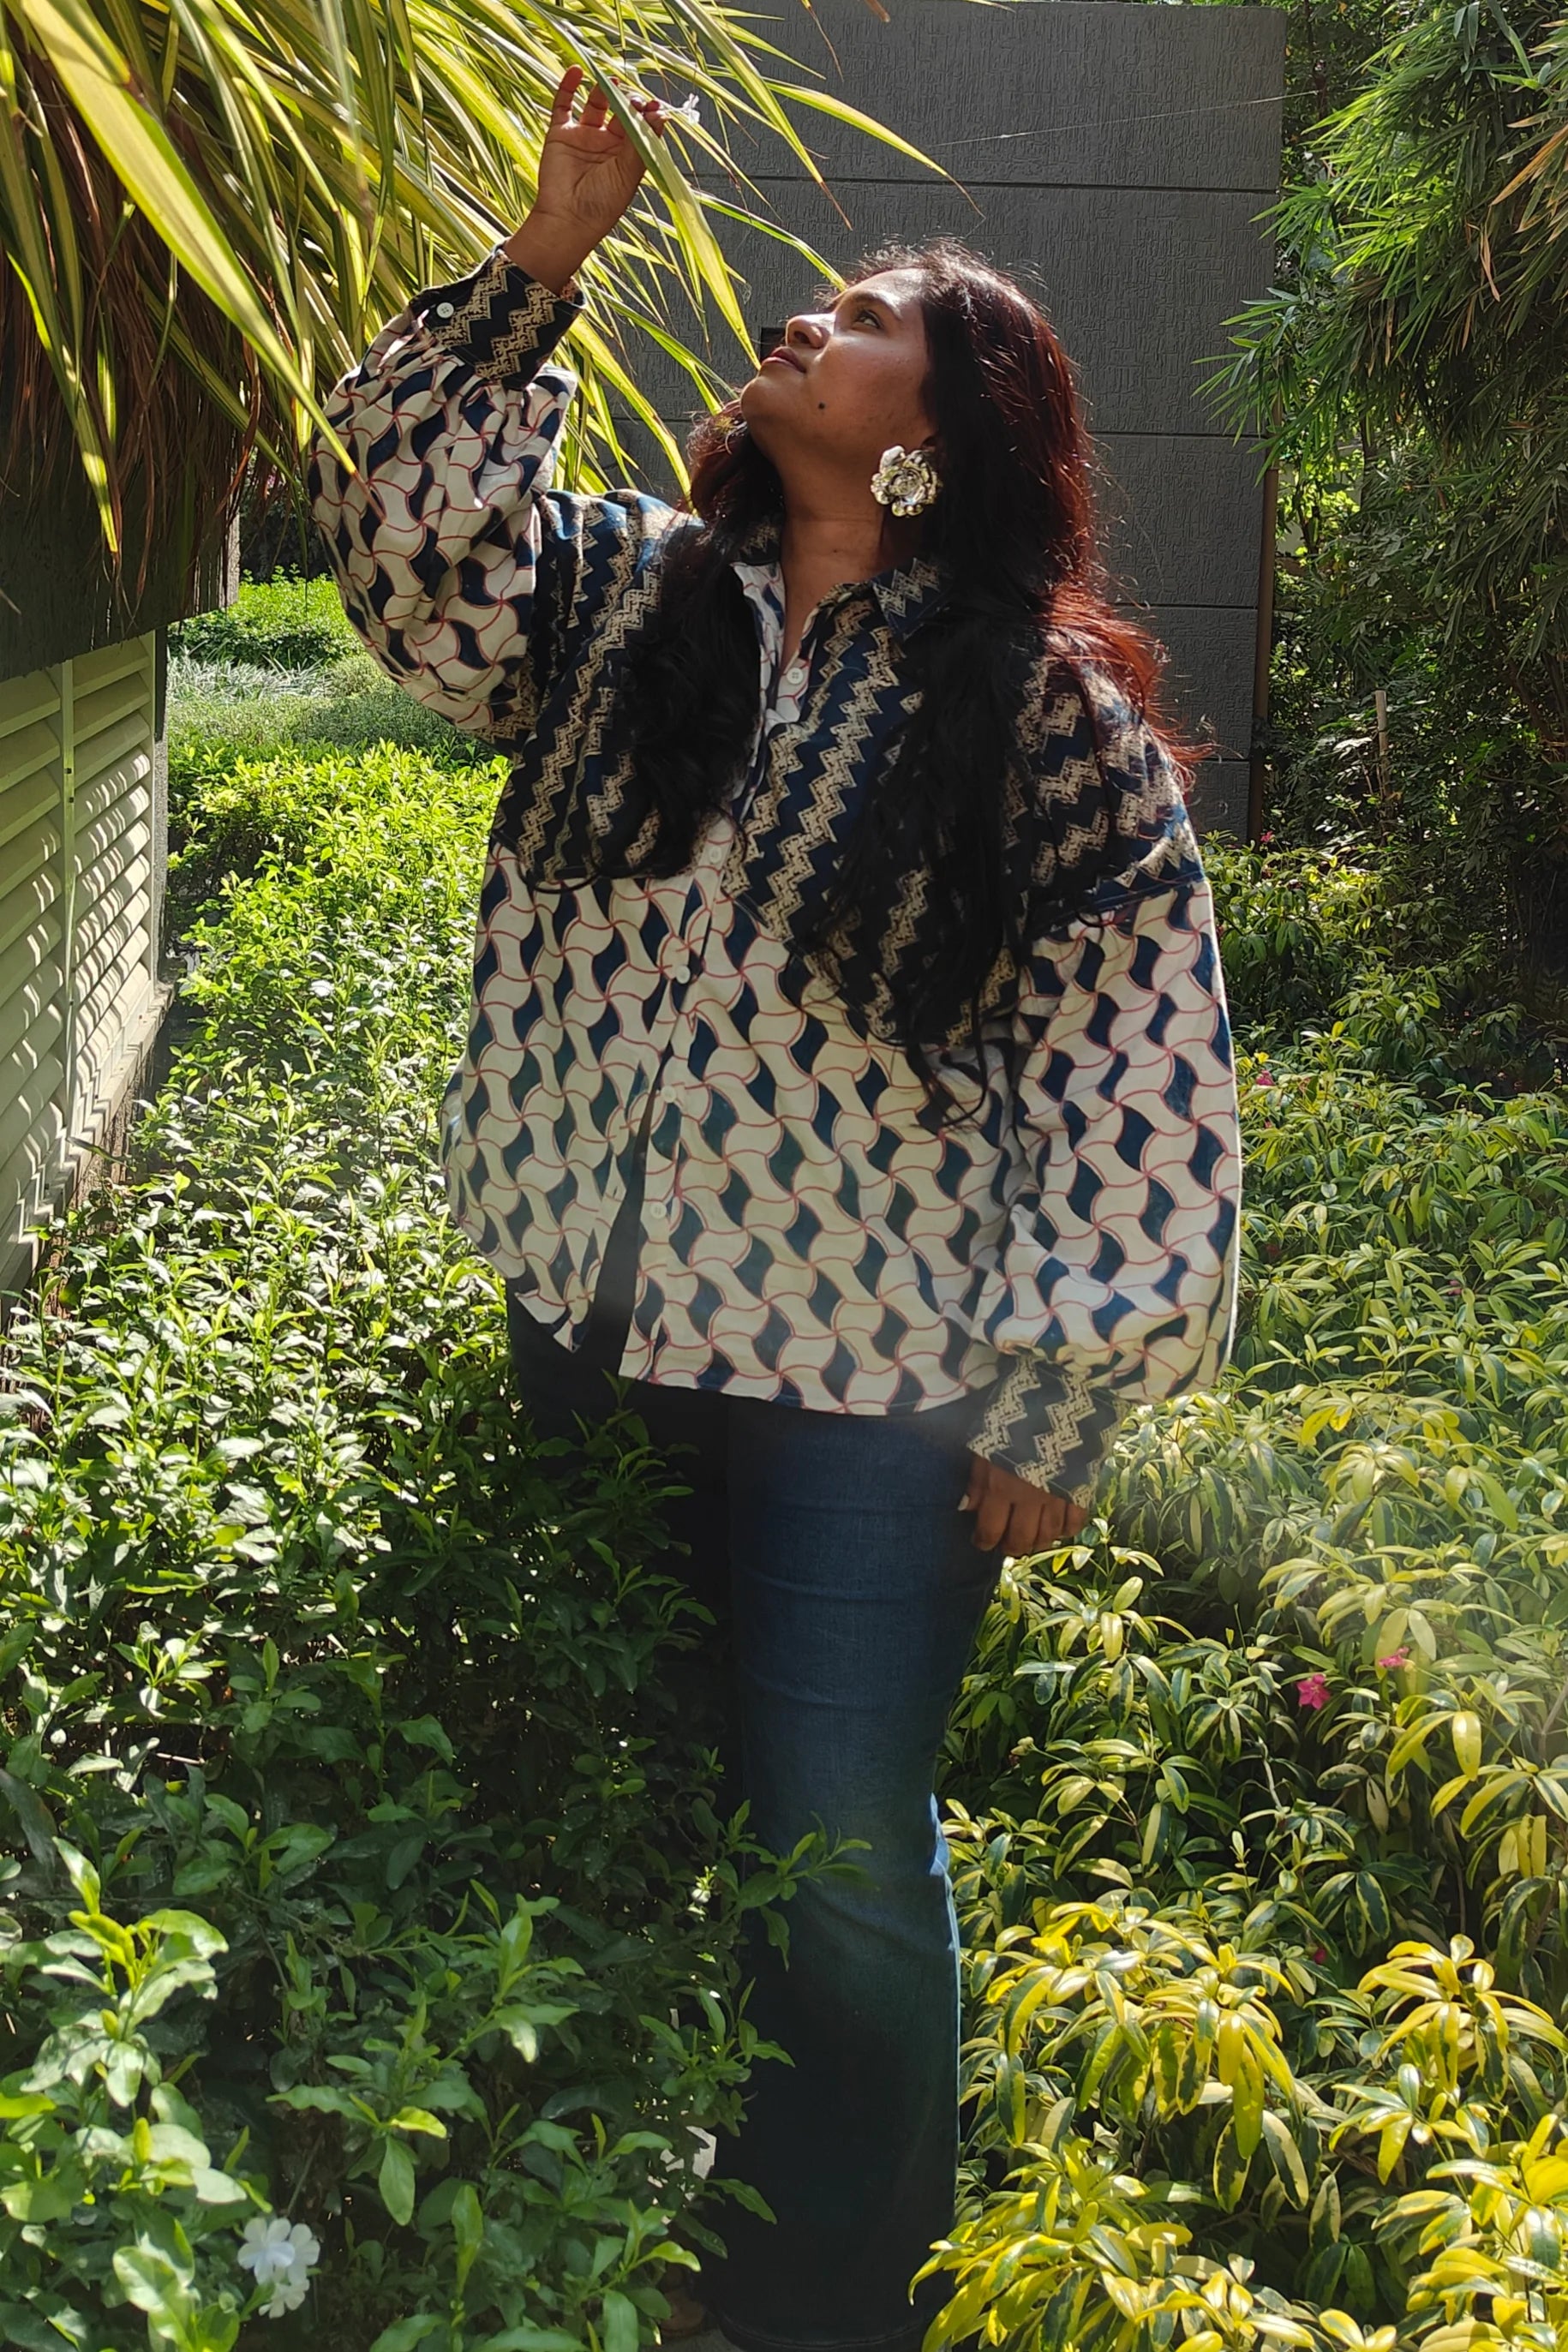 Ilamra hand block printed Kalamkari art organic cotton naturally dyed paneled blouse, intricate indigo print patchwork and the big puffy sleeves shirt